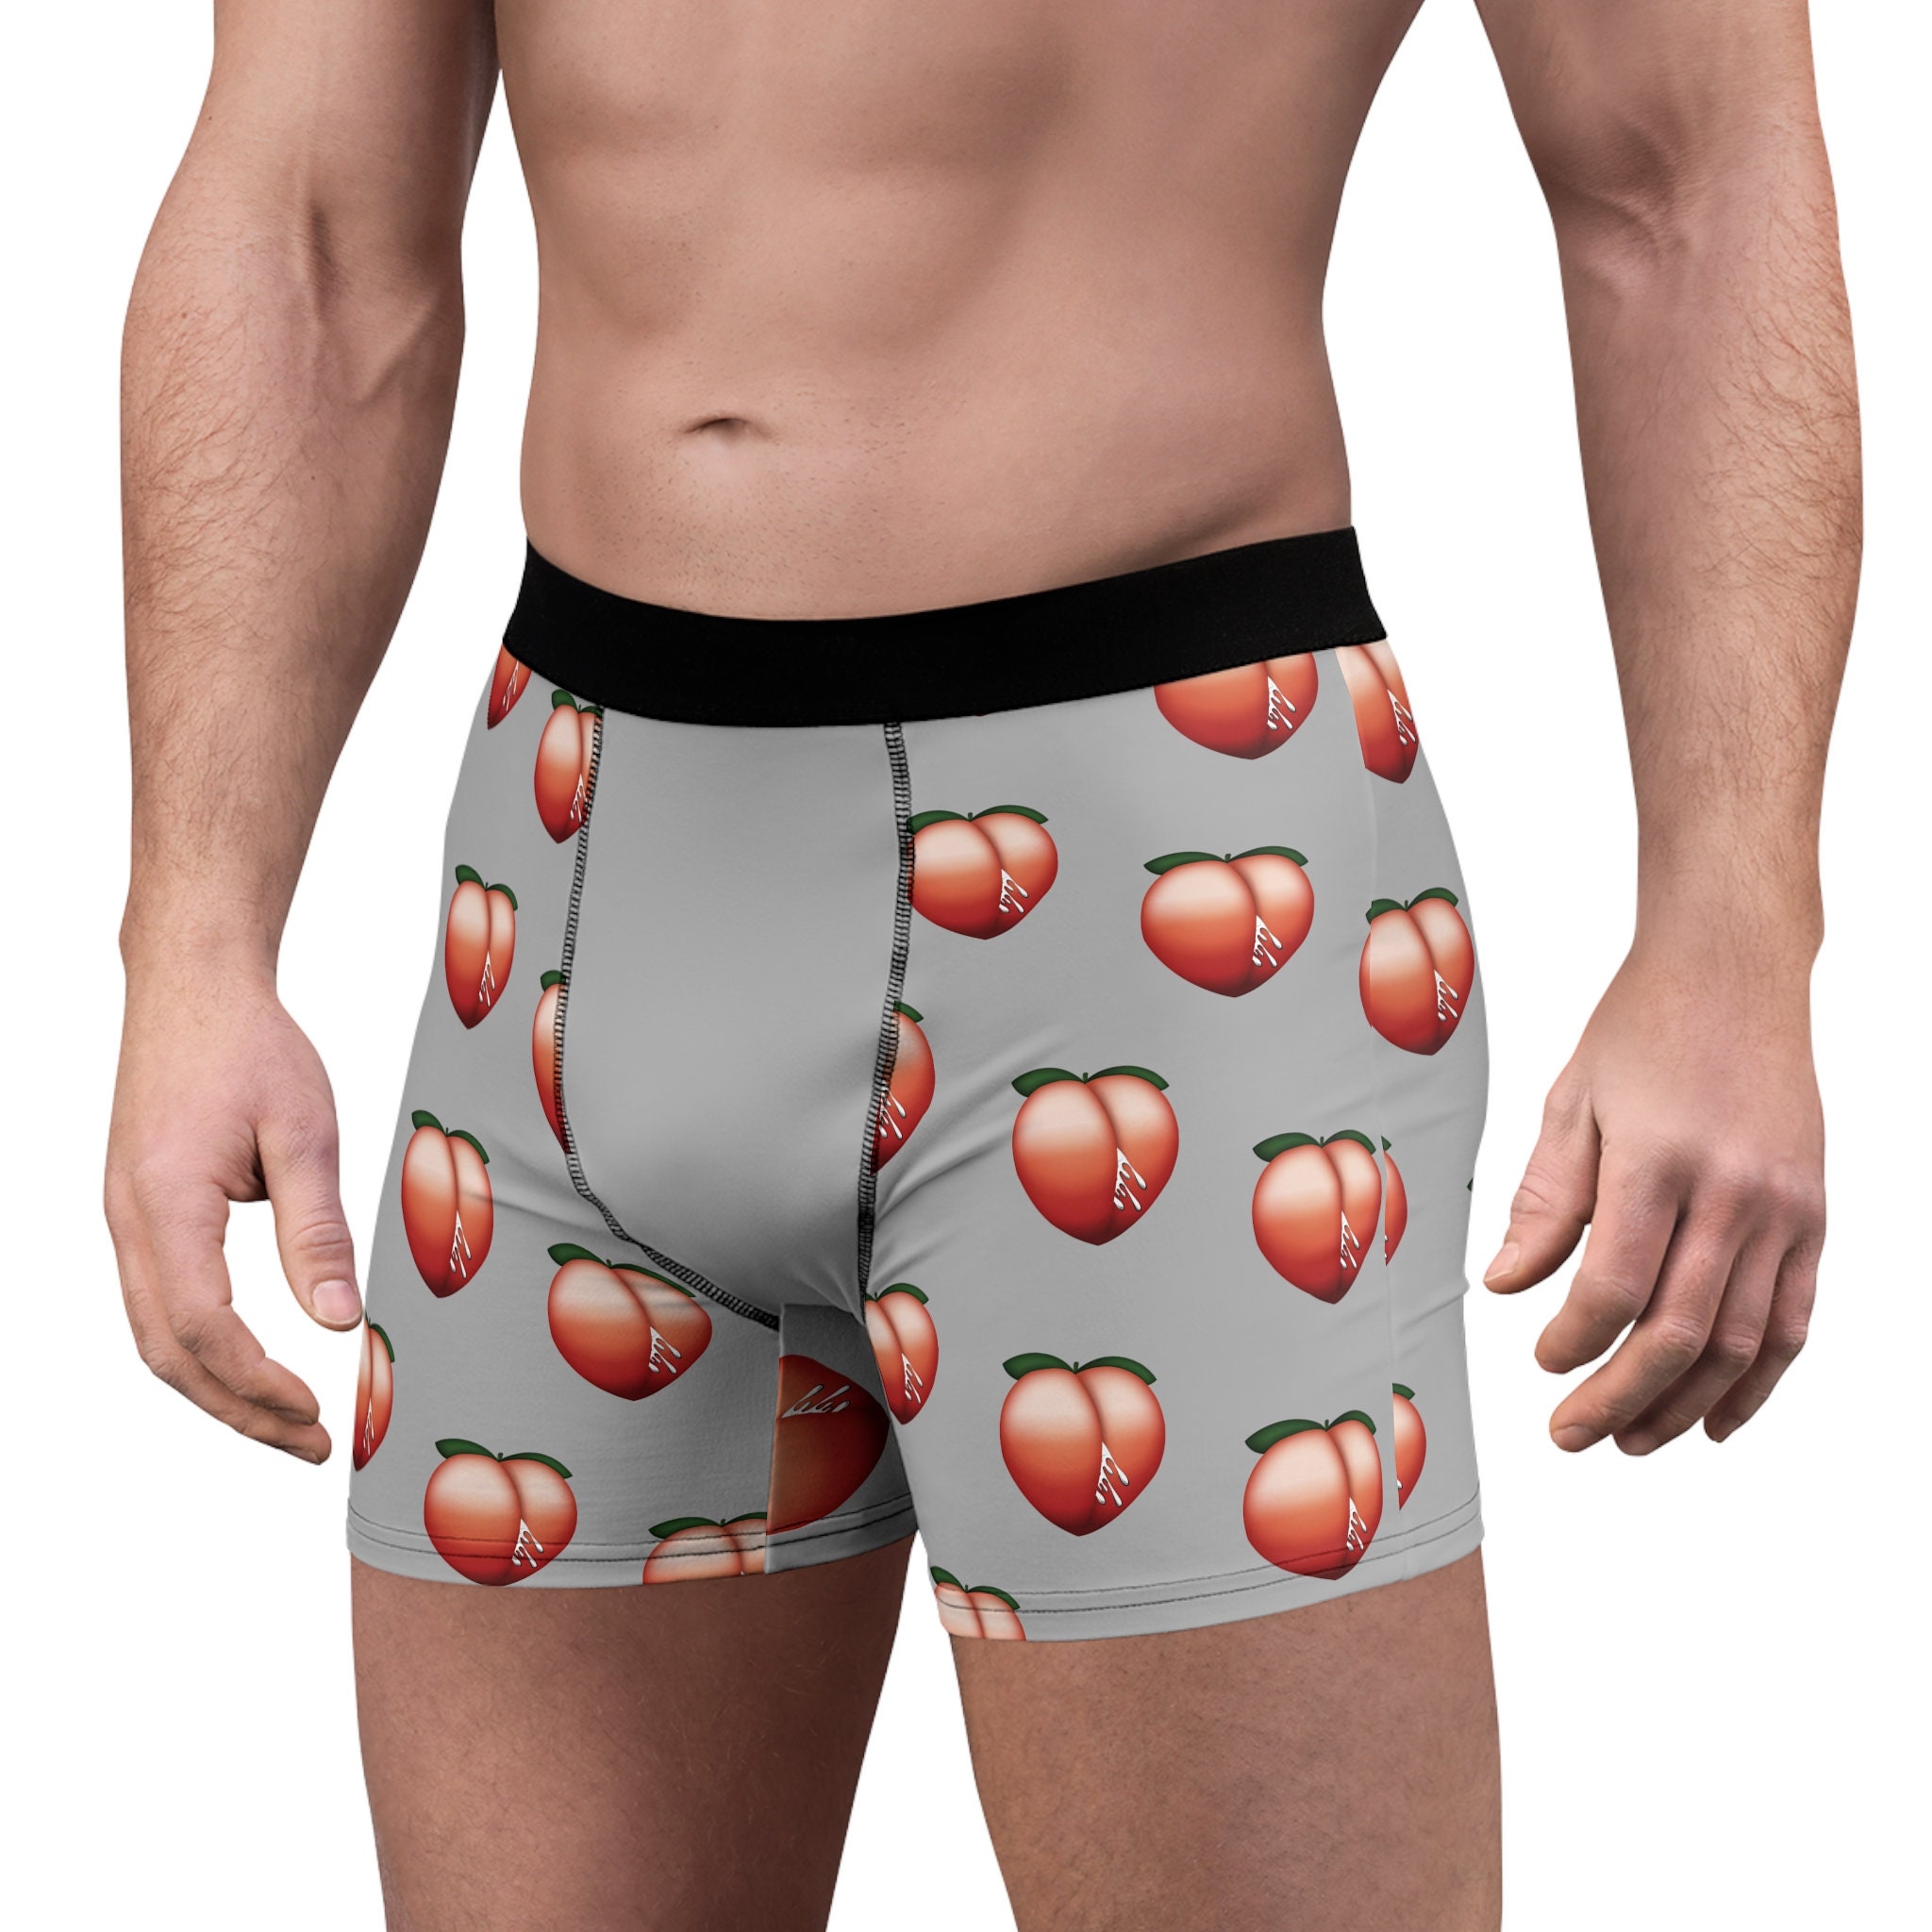 Peach Underwear -  Canada